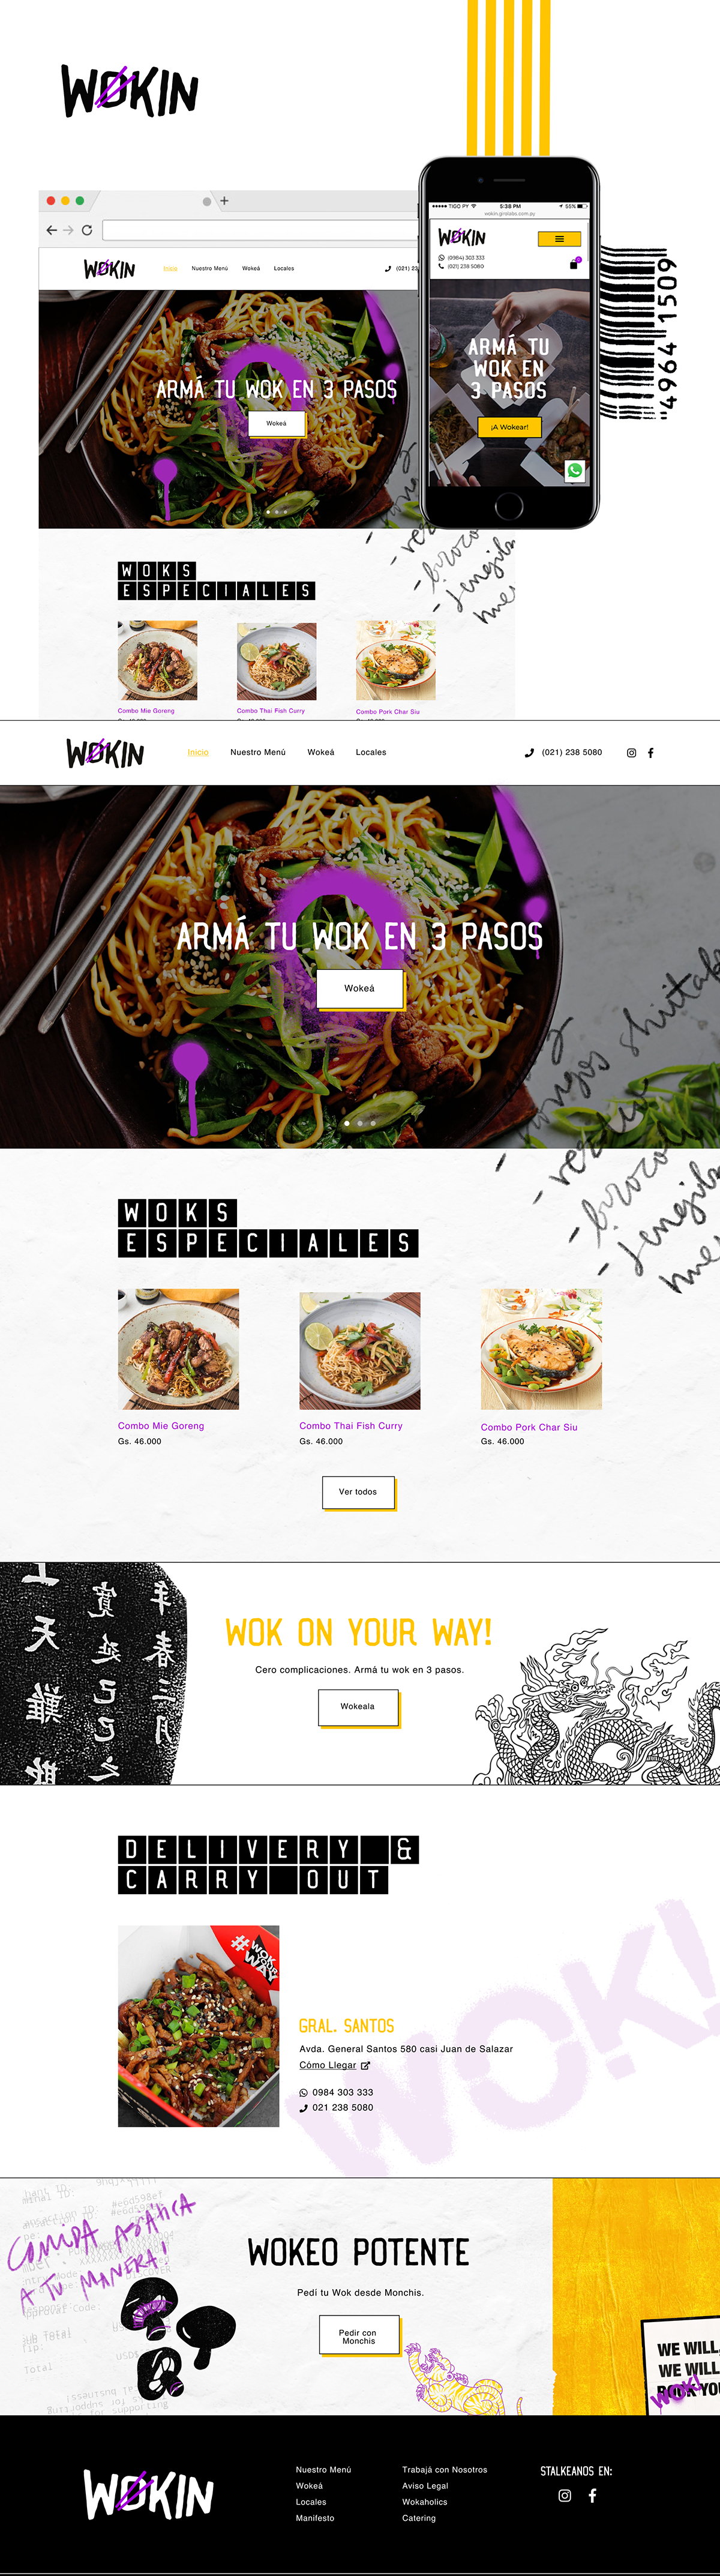 e-commerce delivery Website restaurant